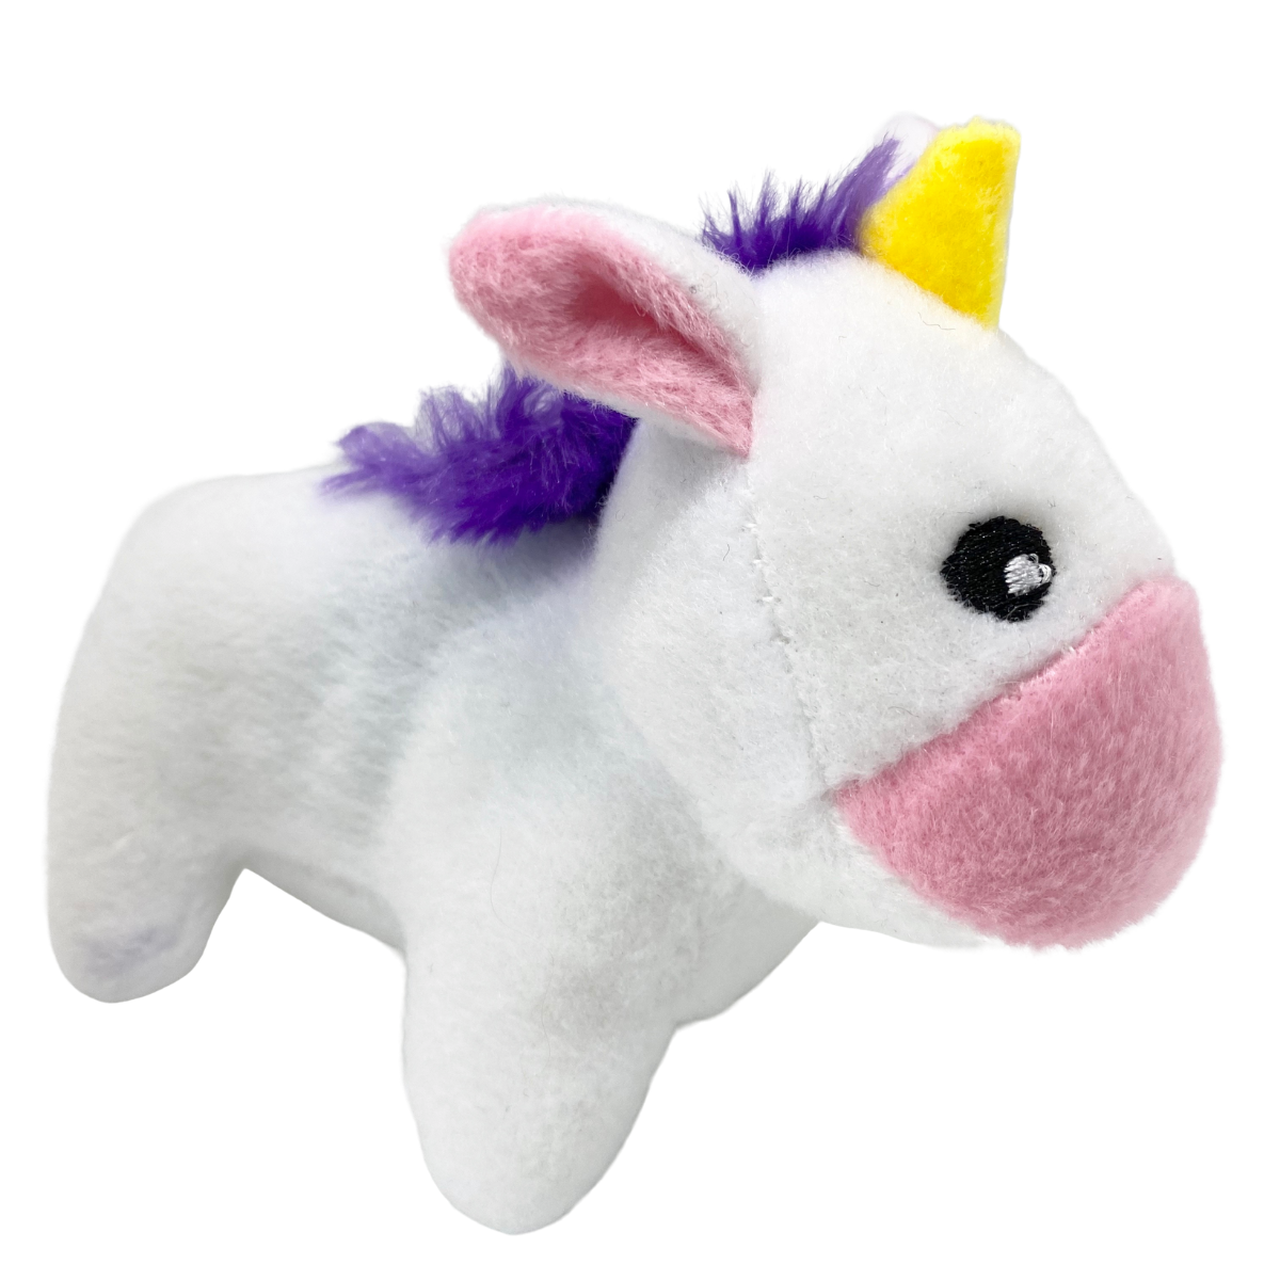 Mini Unicorns - Mini Dog Toy